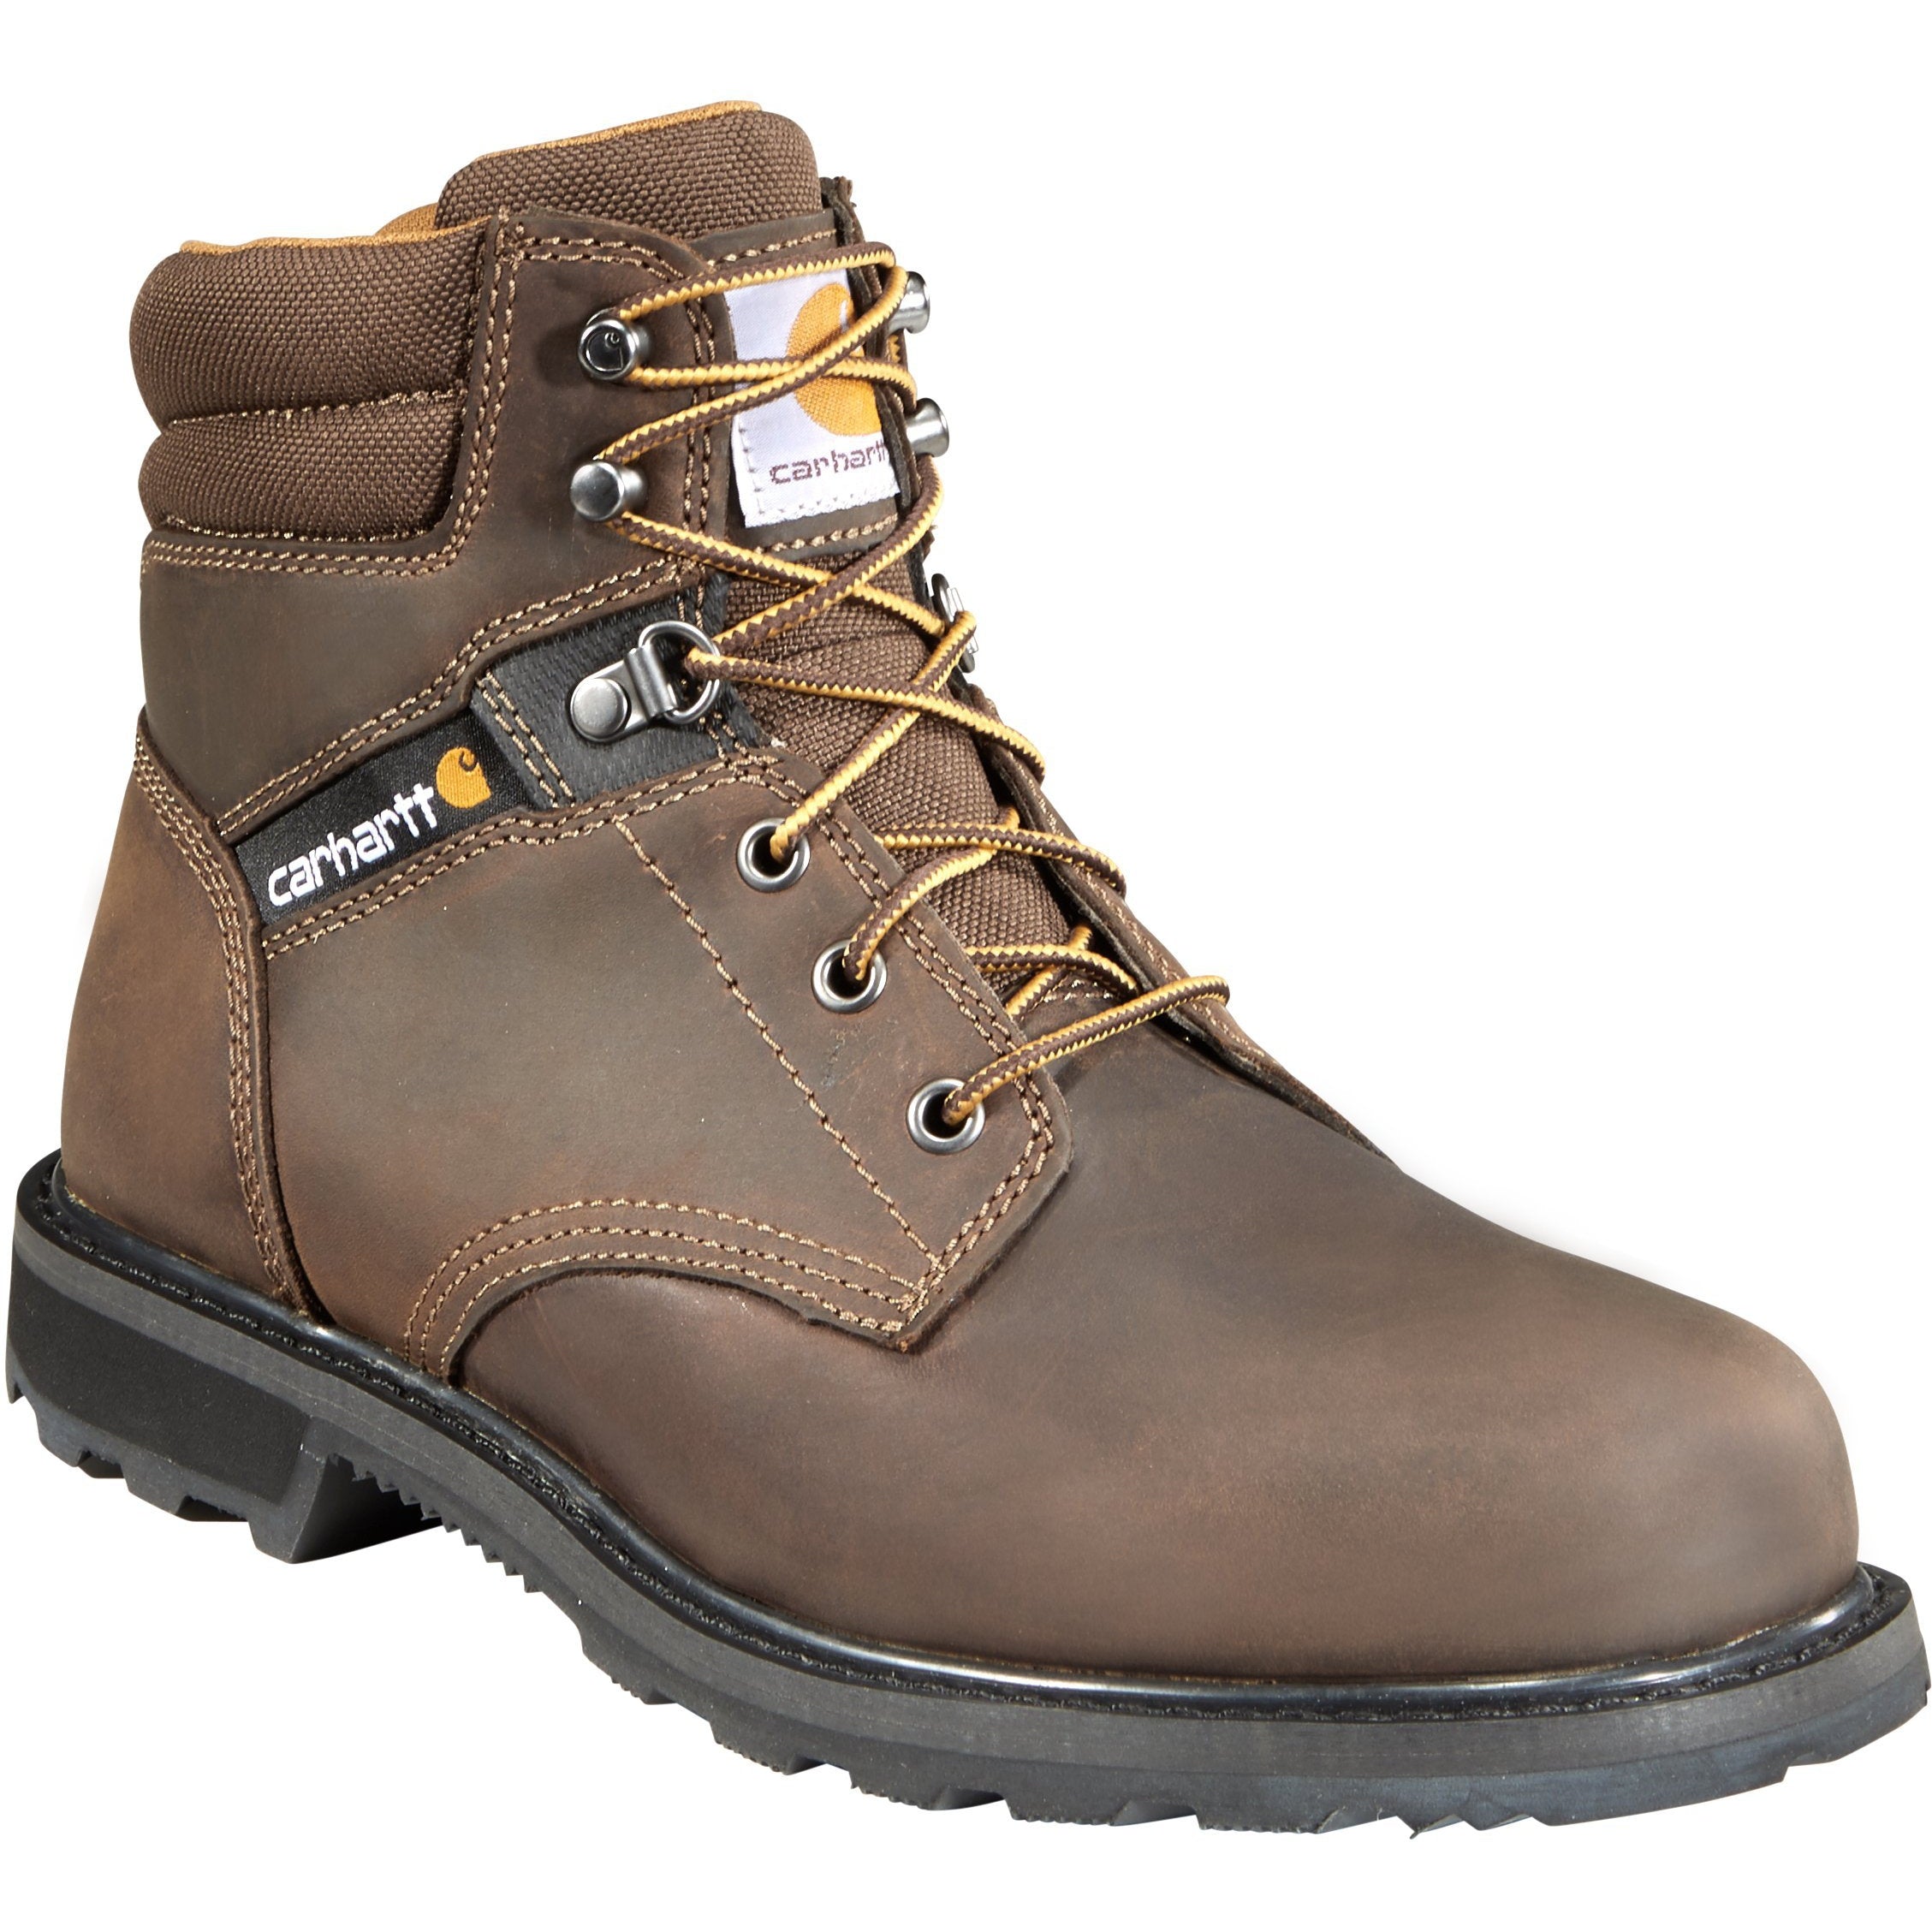 Carhartt Men's 6" Soft Toe Work Boot - Brown - CMW6174 8 / Medium / Brown - Overlook Boots